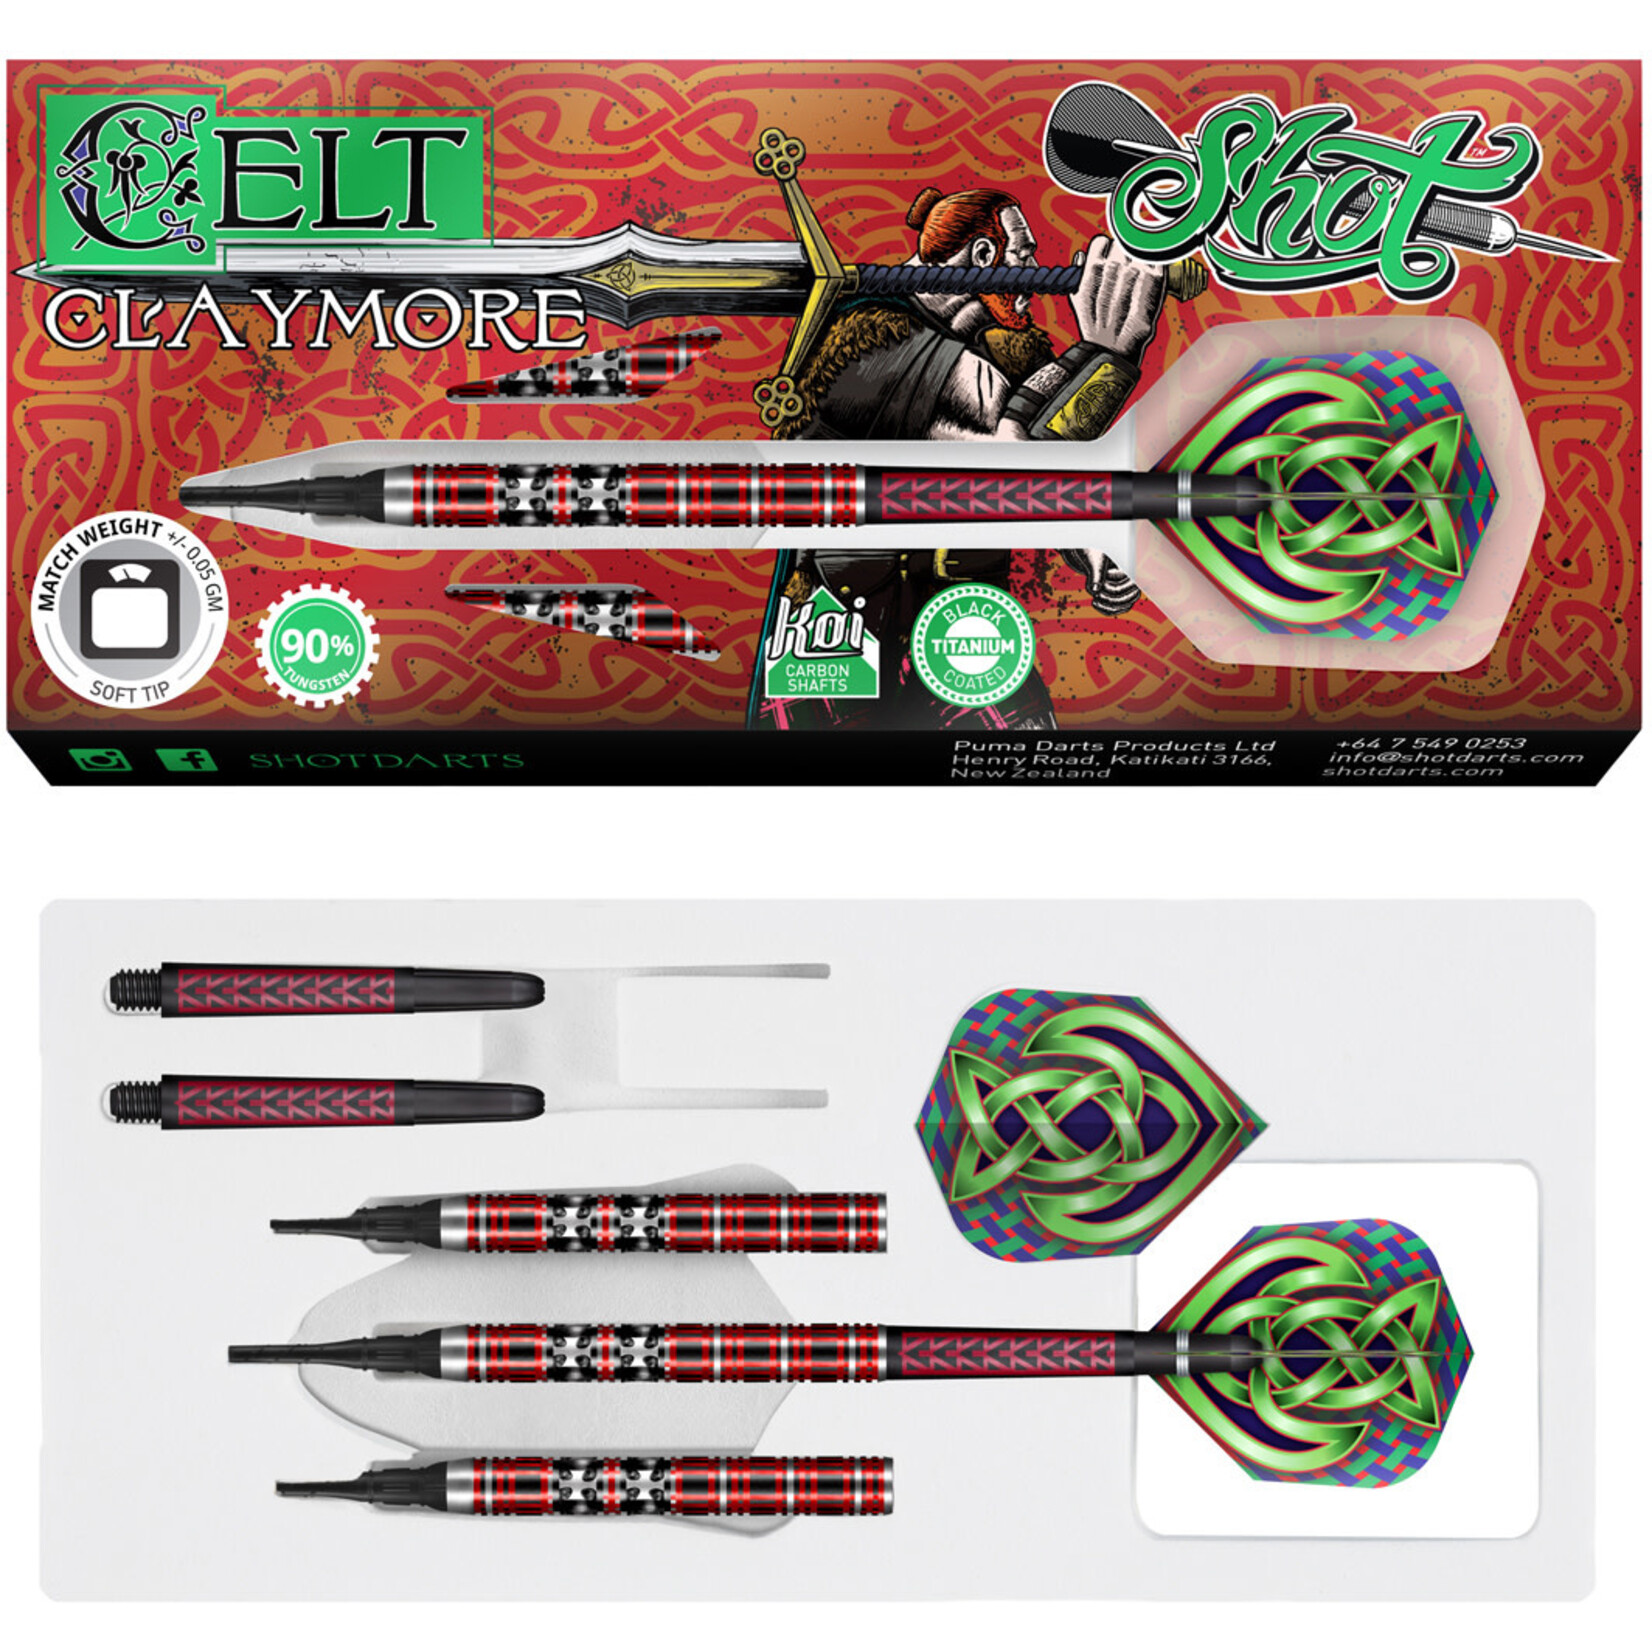 SHOT DARTS Celt Claymore Soft Tip Dart Set 20gm